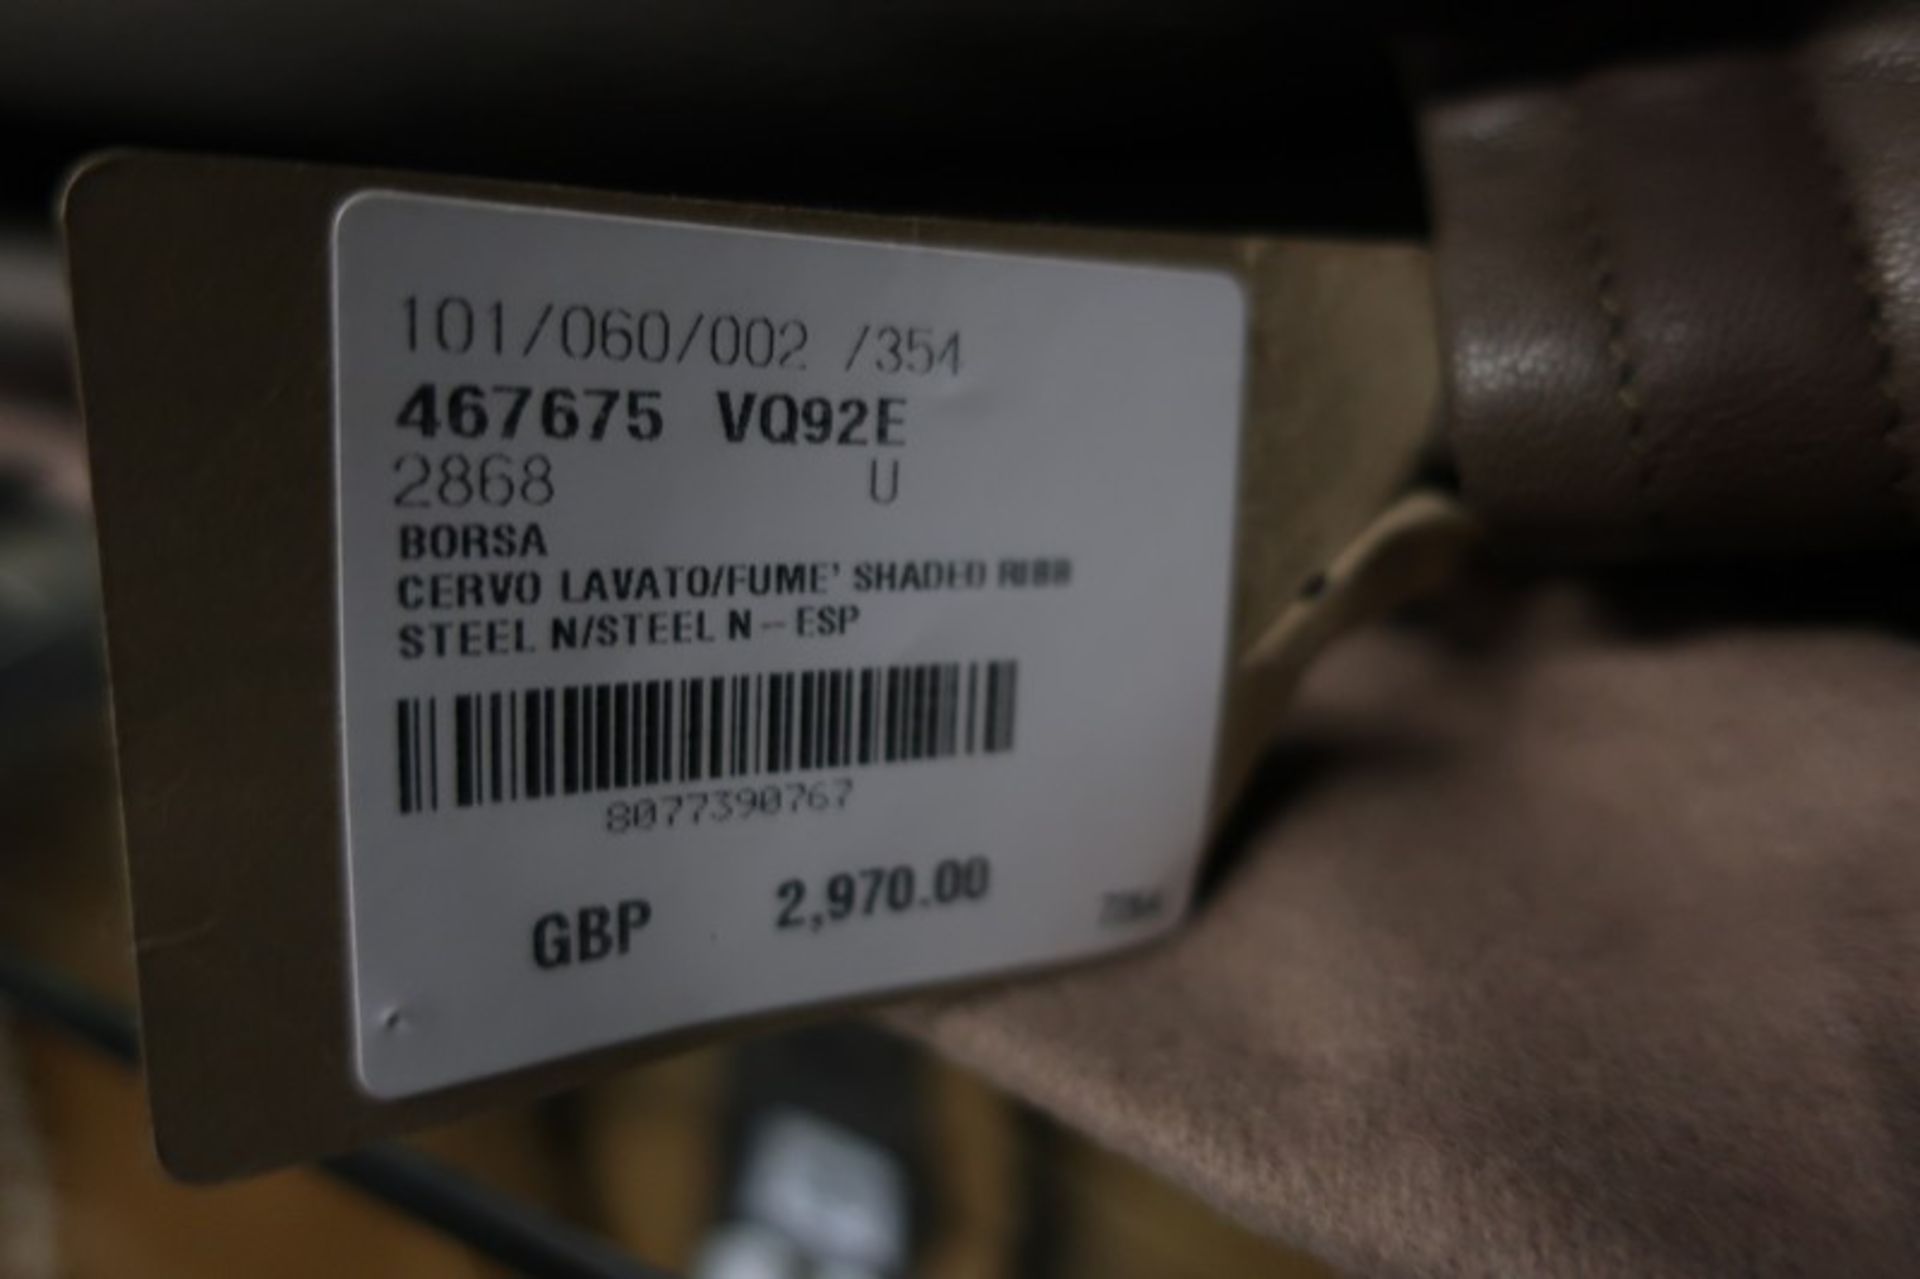 One as new Bottega Veneta Borsa leather bag in brown. - Image 2 of 2